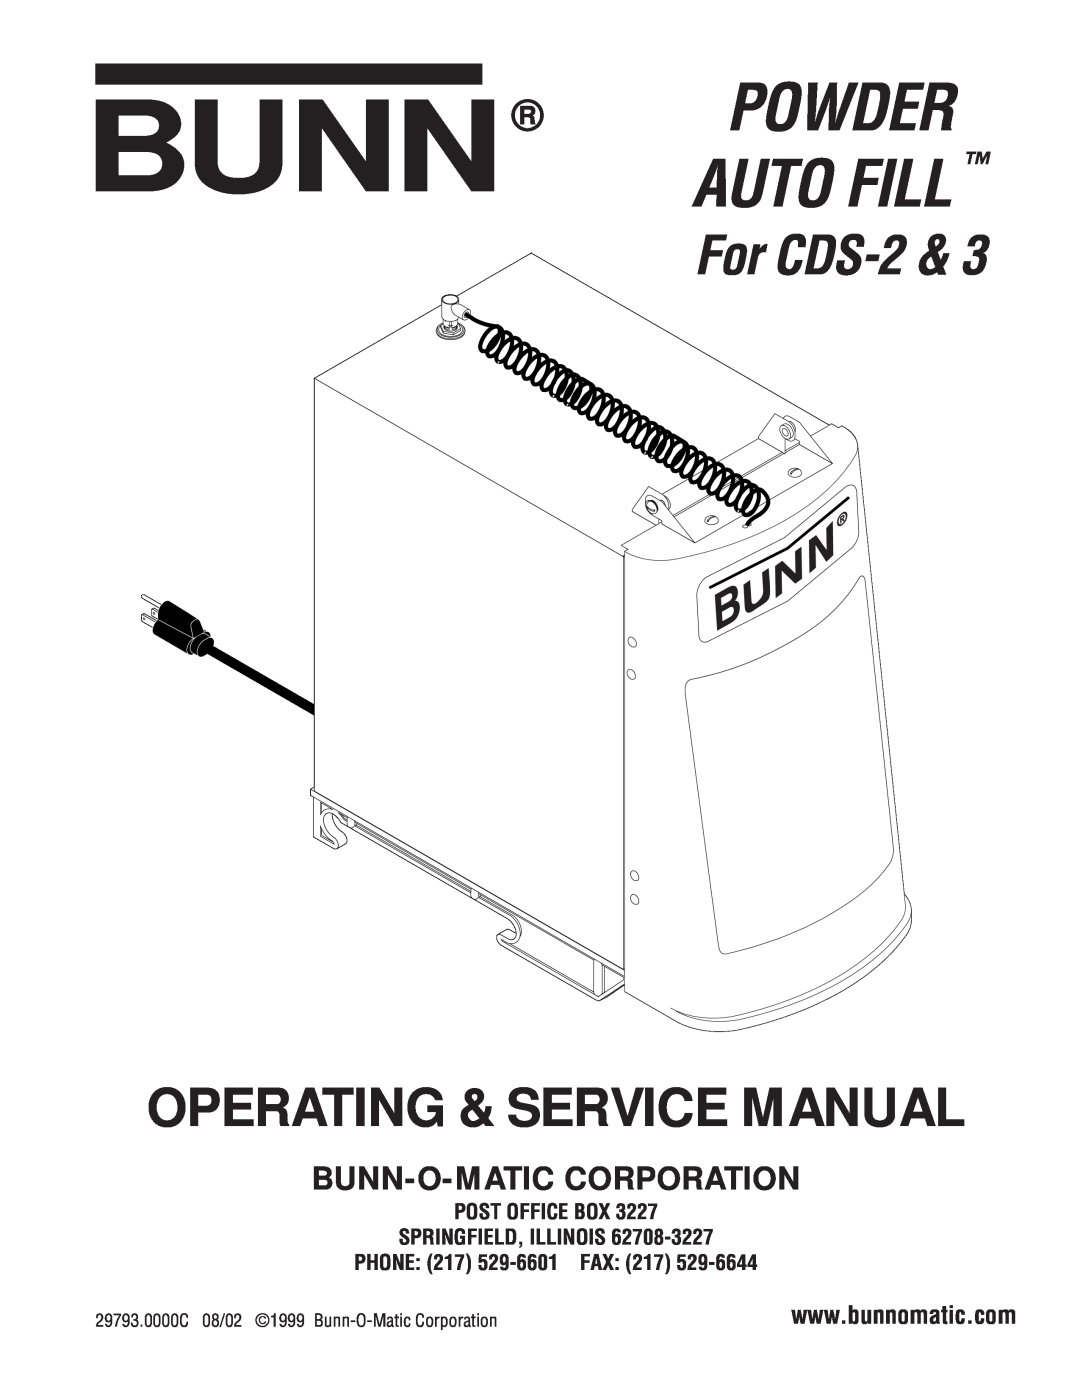 Bunn CDS-3 manual Post Office Box Springfield, Illinois, PHONE 217 529-6601FAX, Powder Auto Fill, For CDS-2 